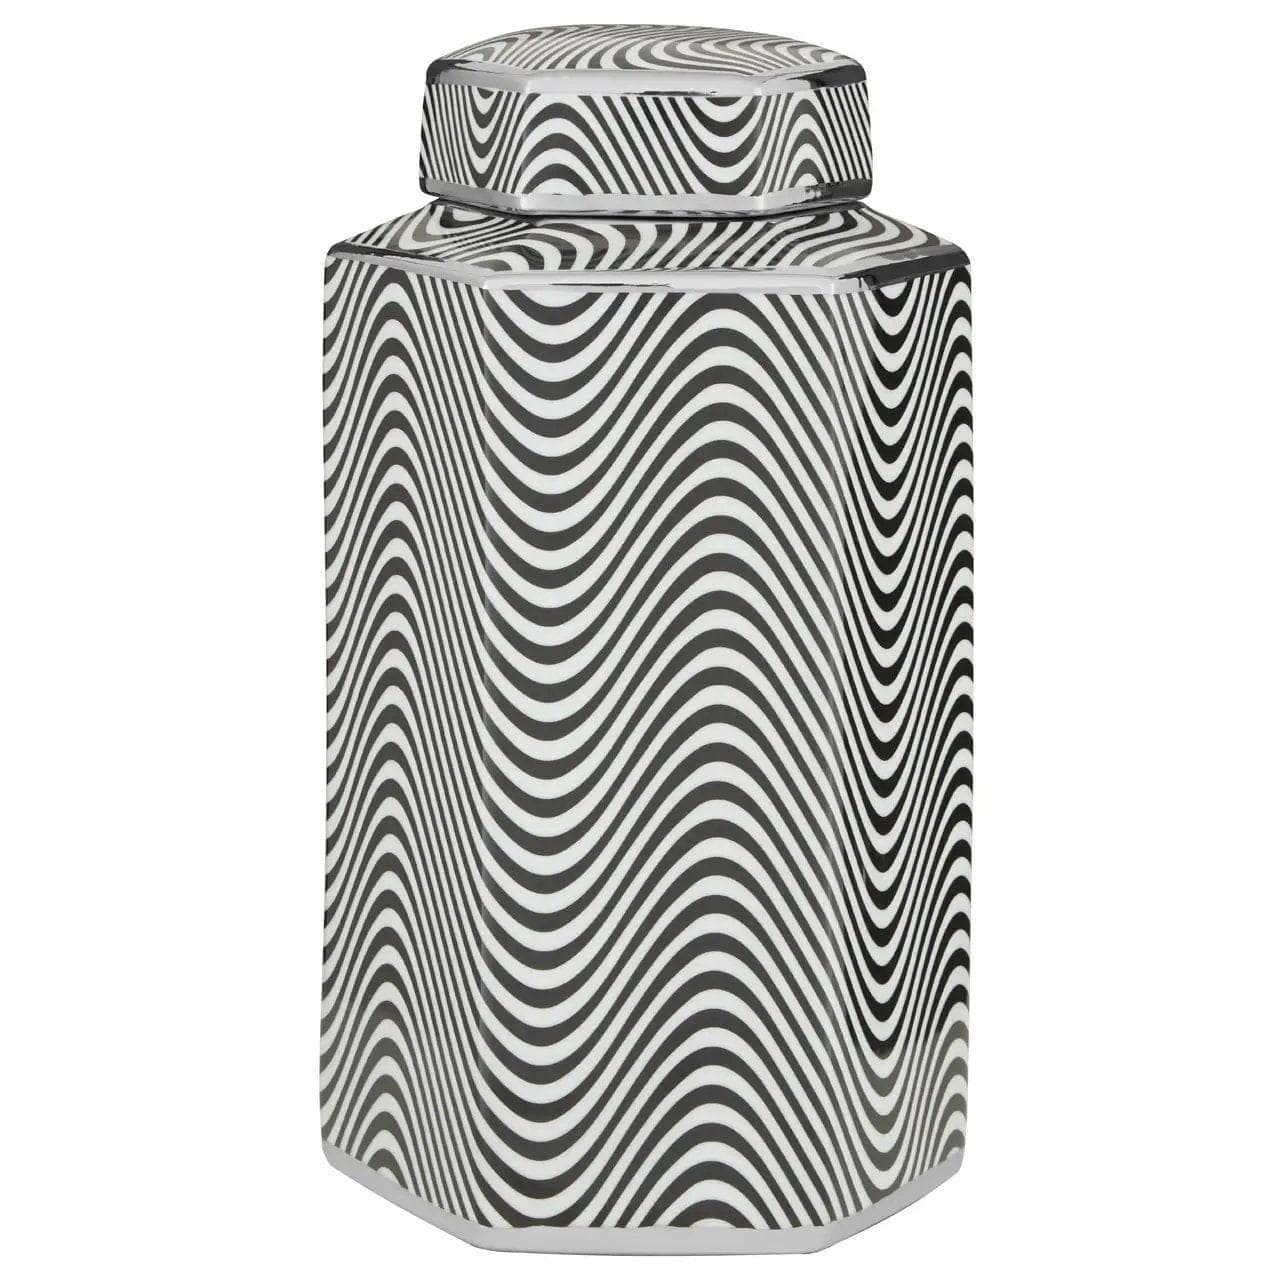  -  This Prem Celeste Hexagonal Jar, Blk/Wht Ceramic Small 5505820  -  60003188